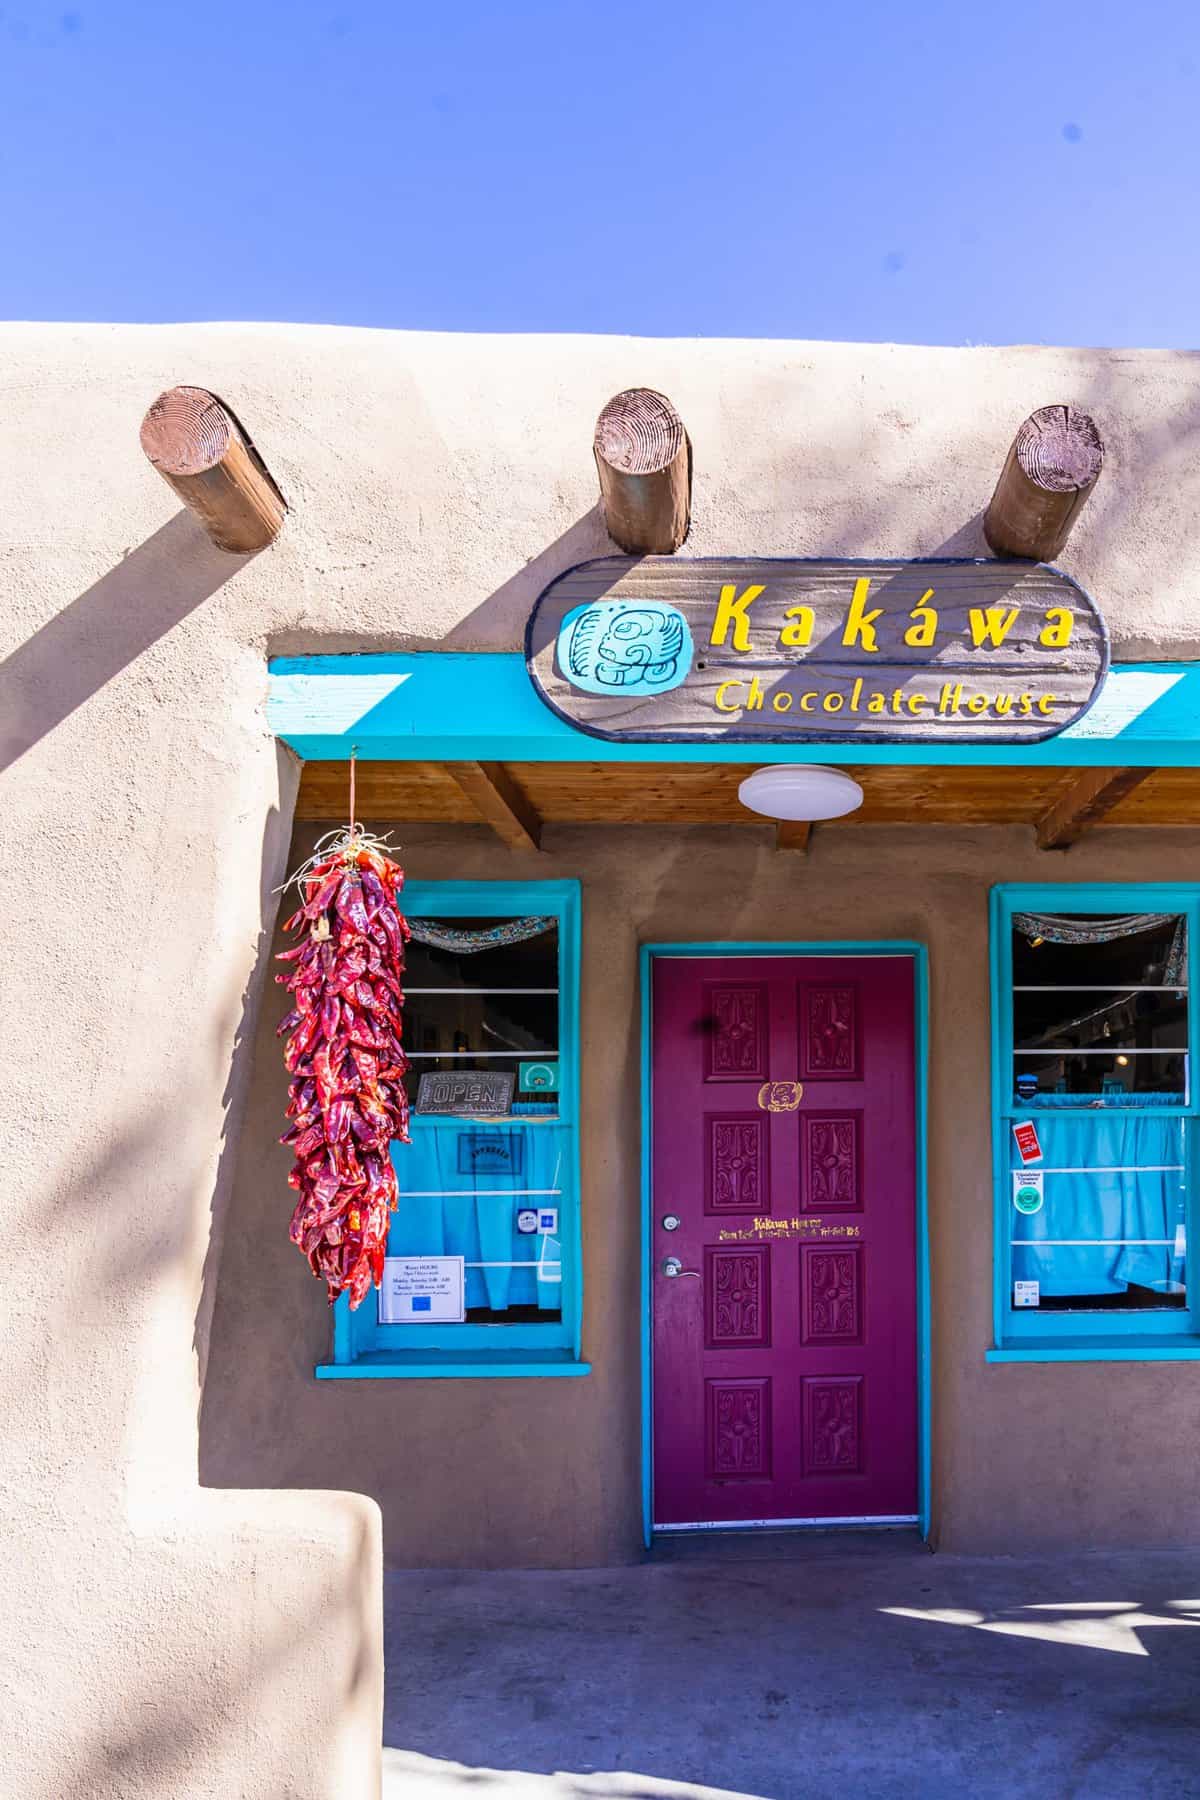 Where to eat in Santa Fe